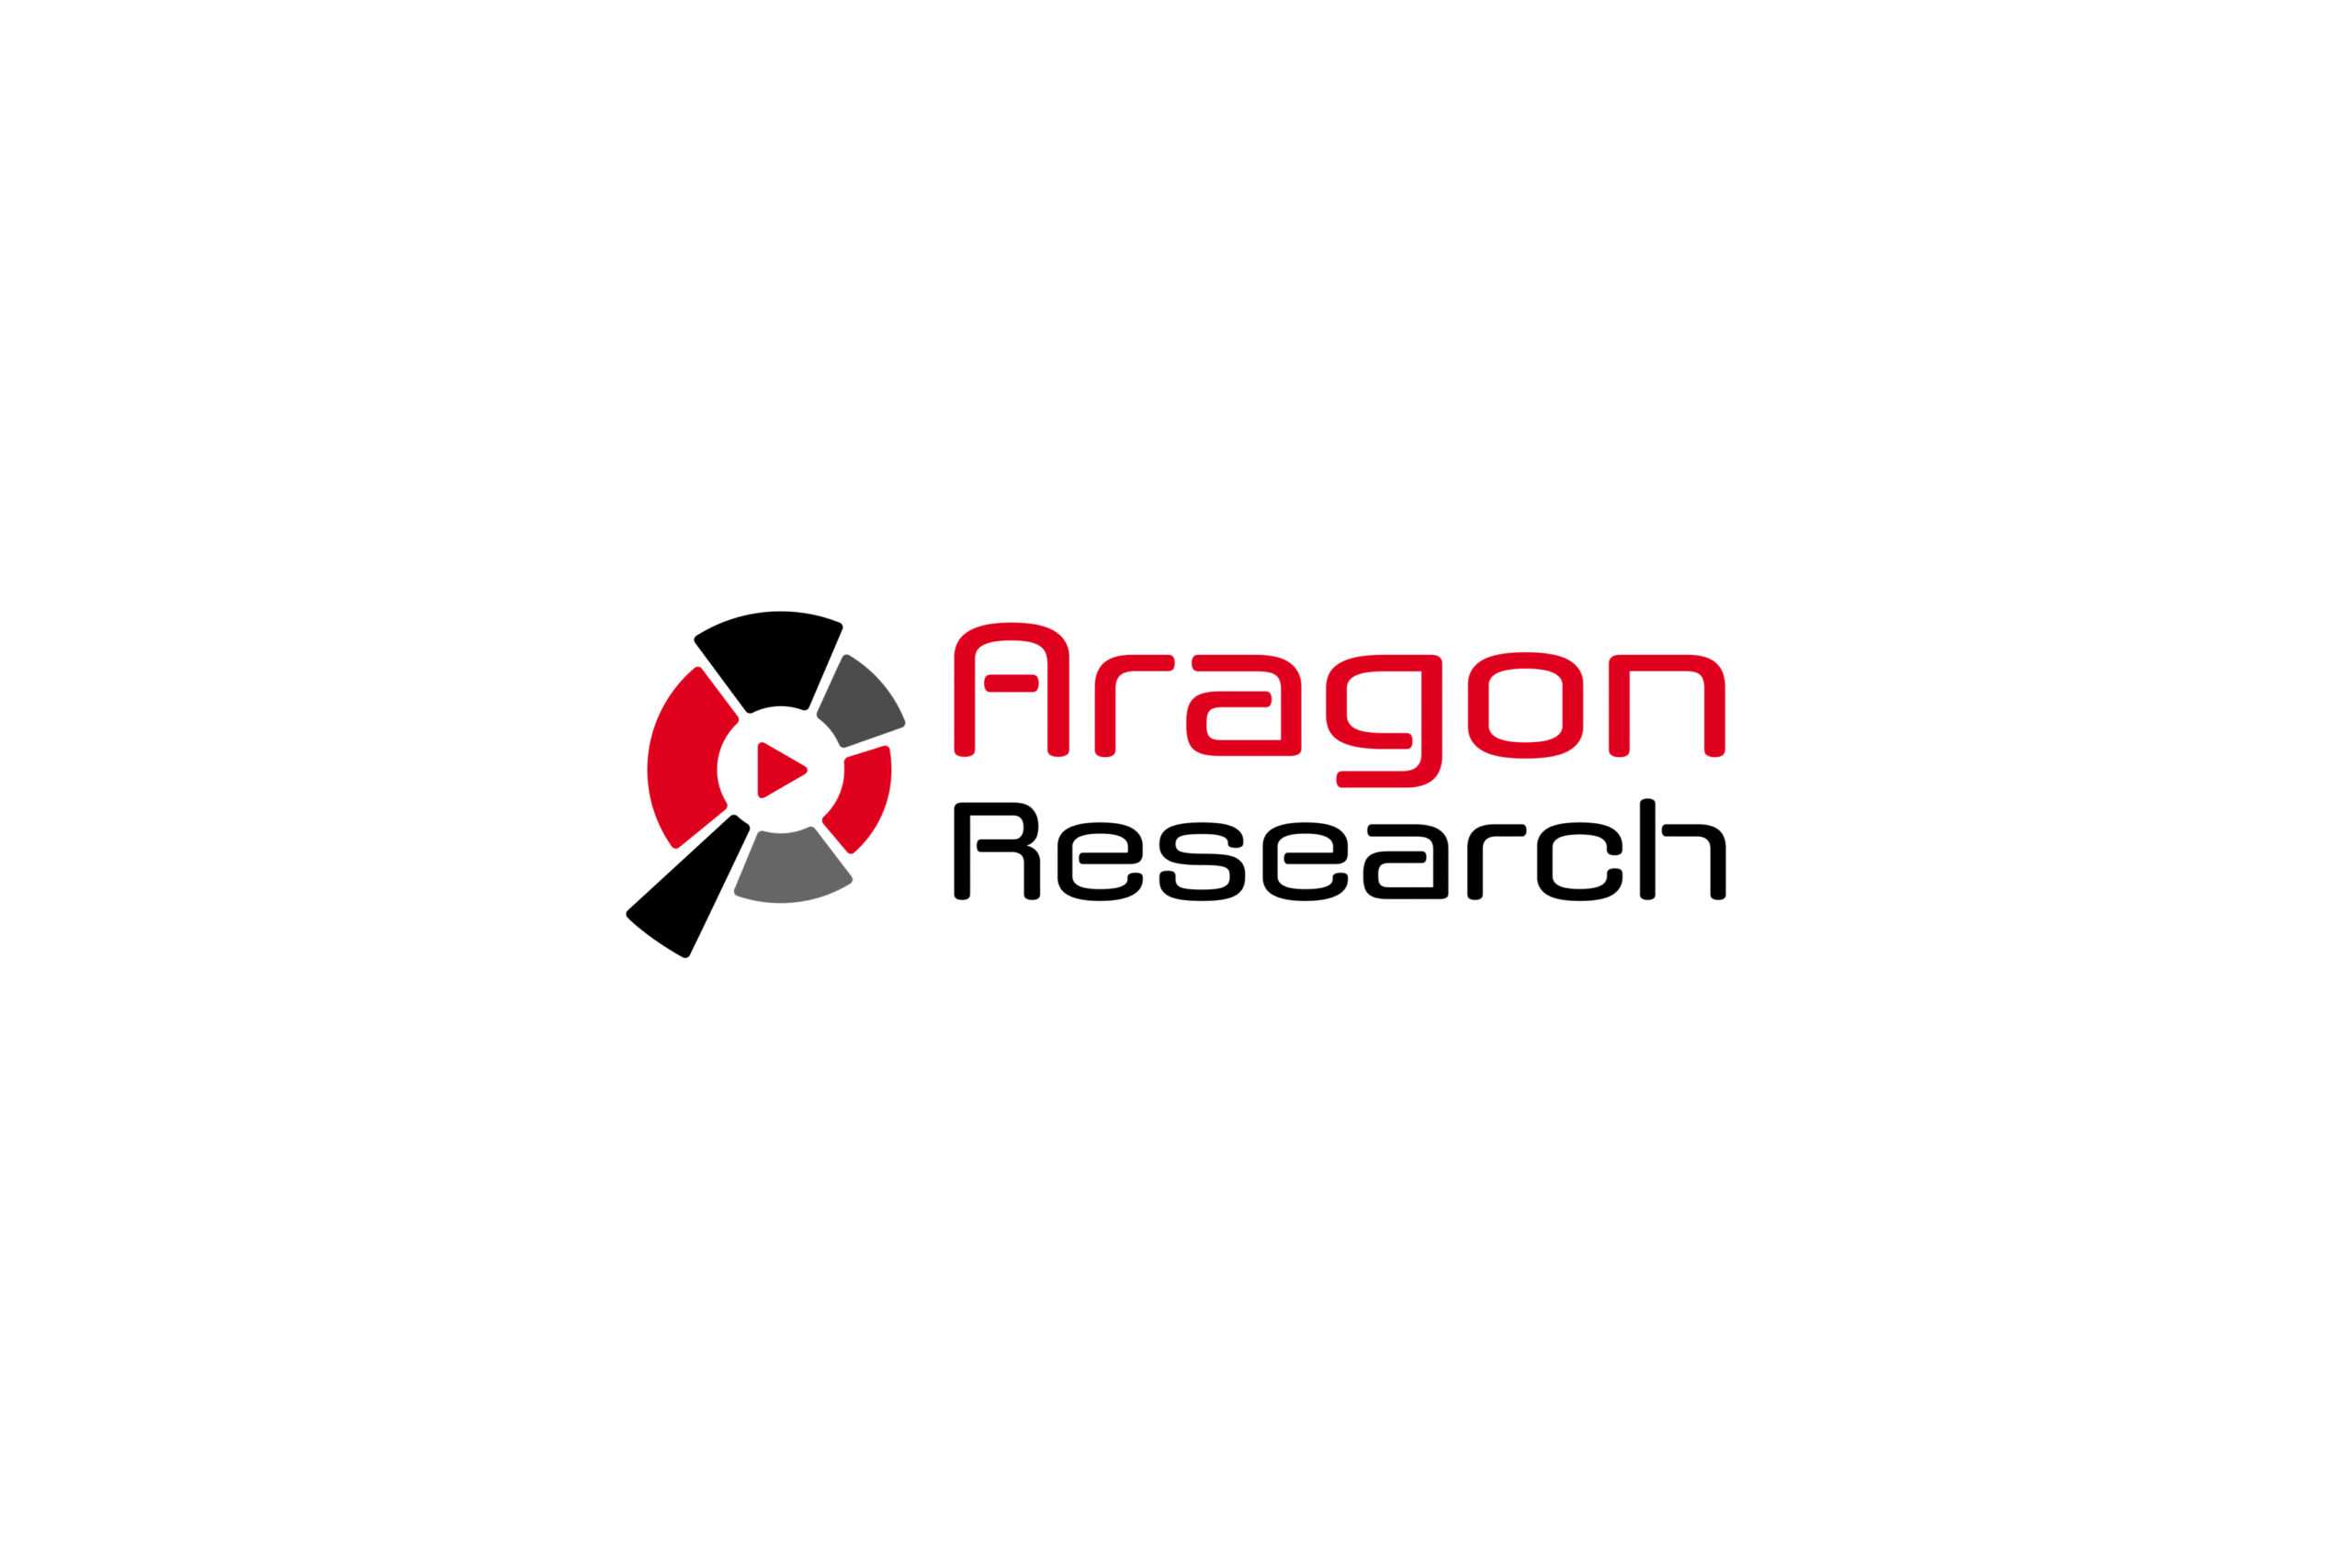 Aragon Research Globe For Intelligent Cc Report 2021